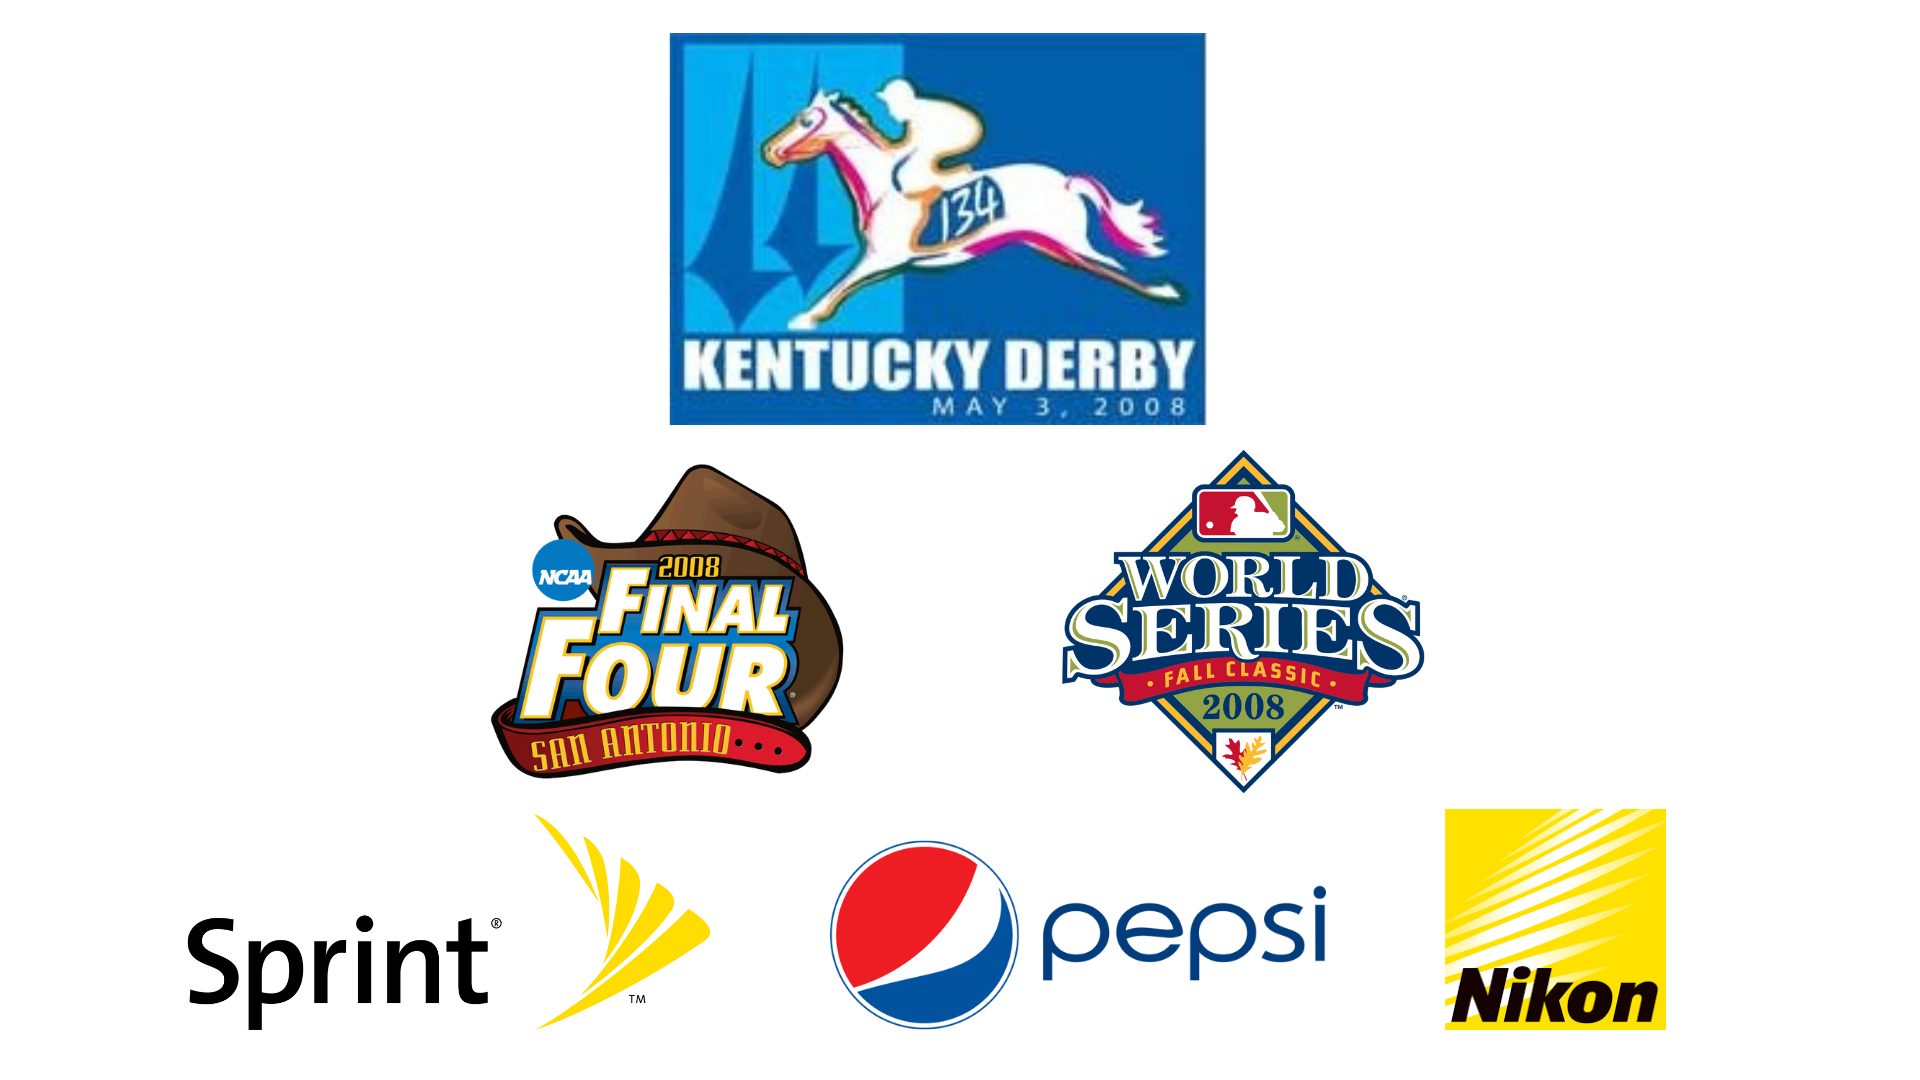 LM Kentucky Derby Logos (6)